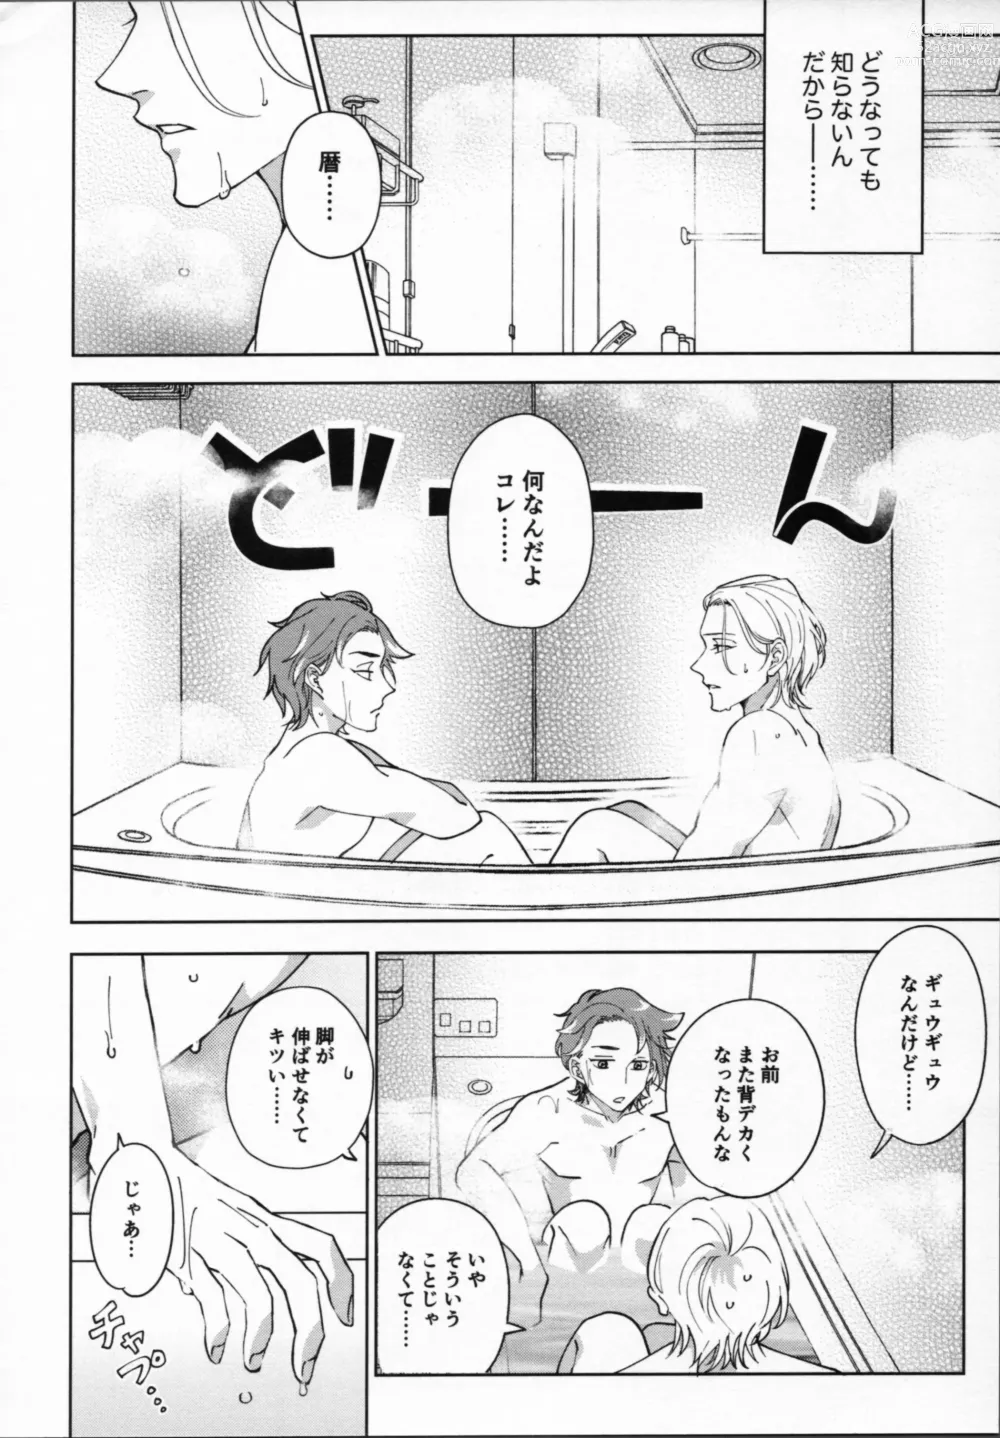 Page 37 of doujinshi Reki ga Warui!